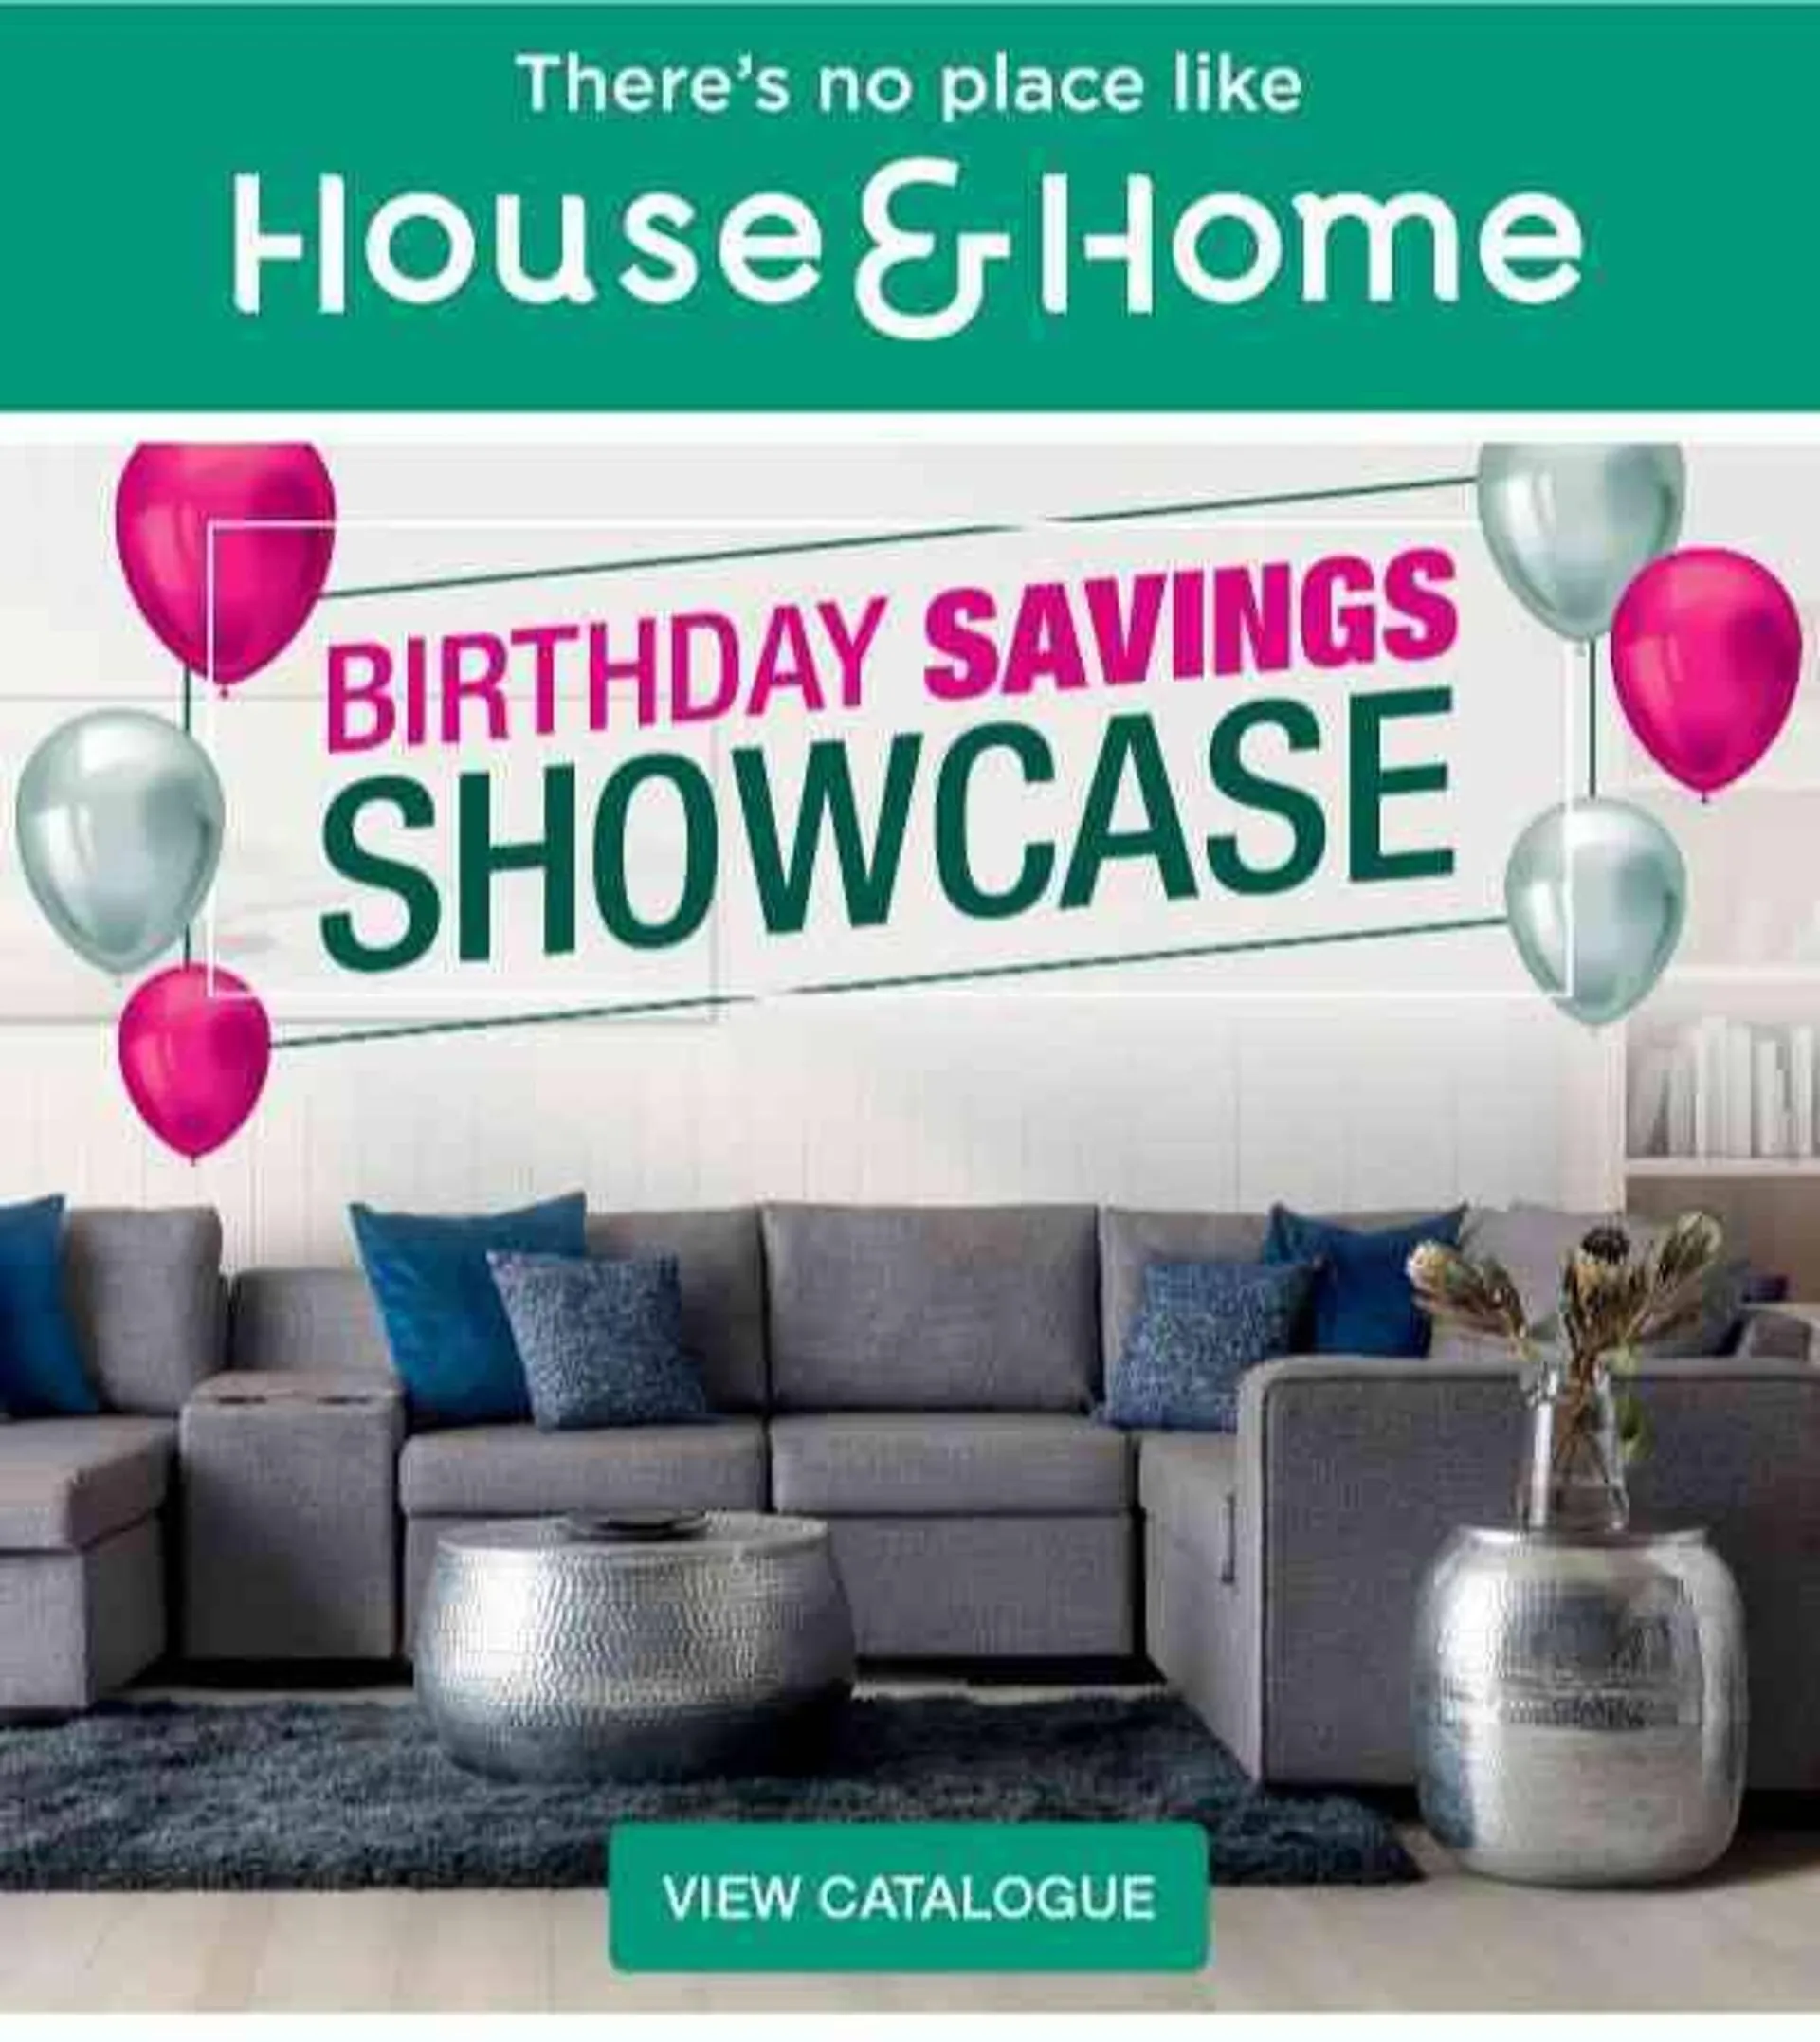 House & Home catalogue - 1